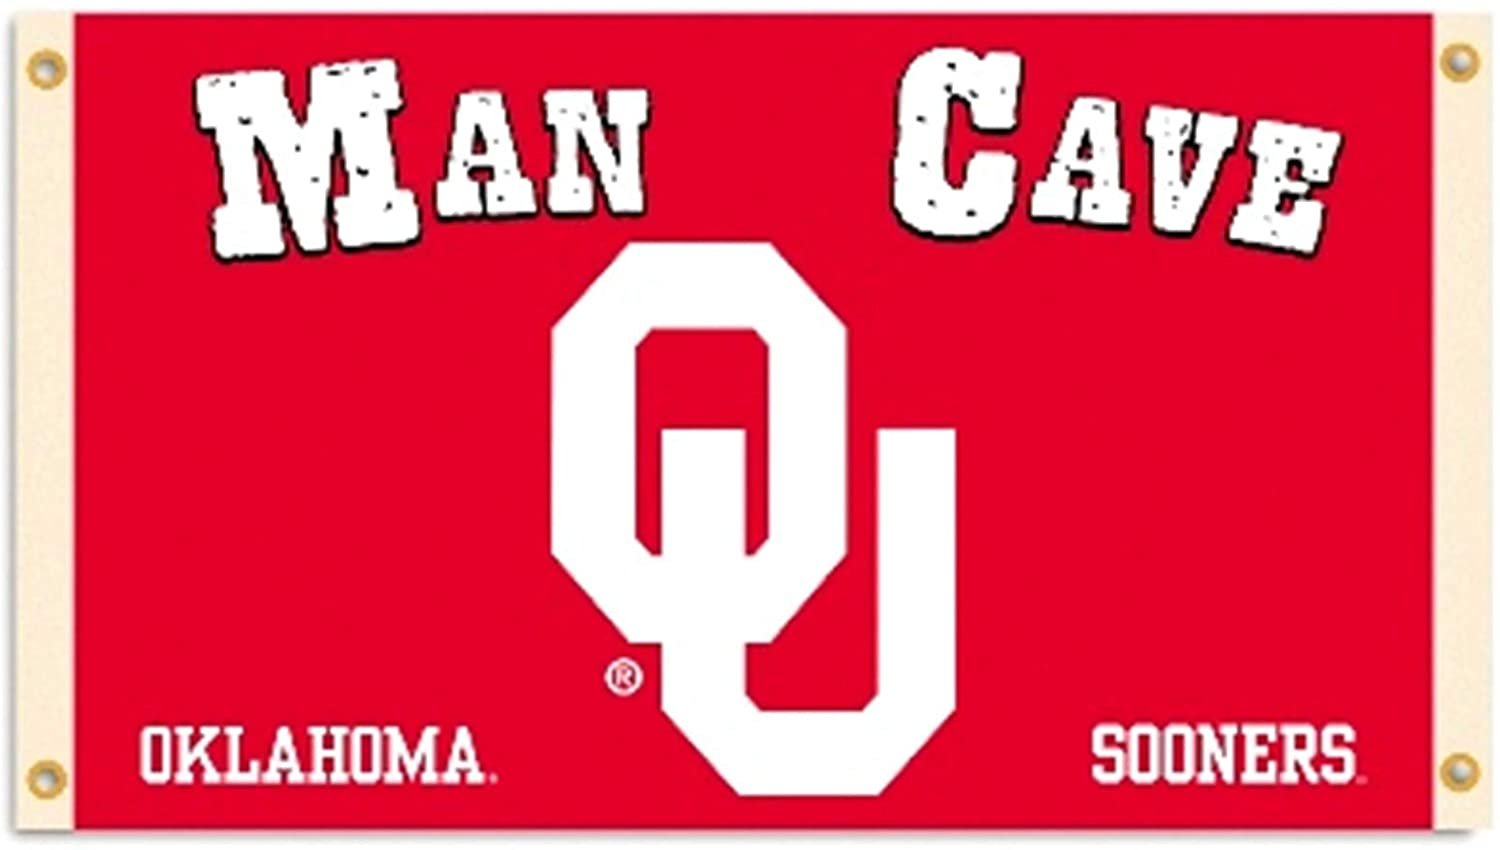 University of Oklahoma Sooners Premium 3x5 Feet Flag Banner, Man Cave Design, Metal Grommets, Outdoor Use, Single Sided